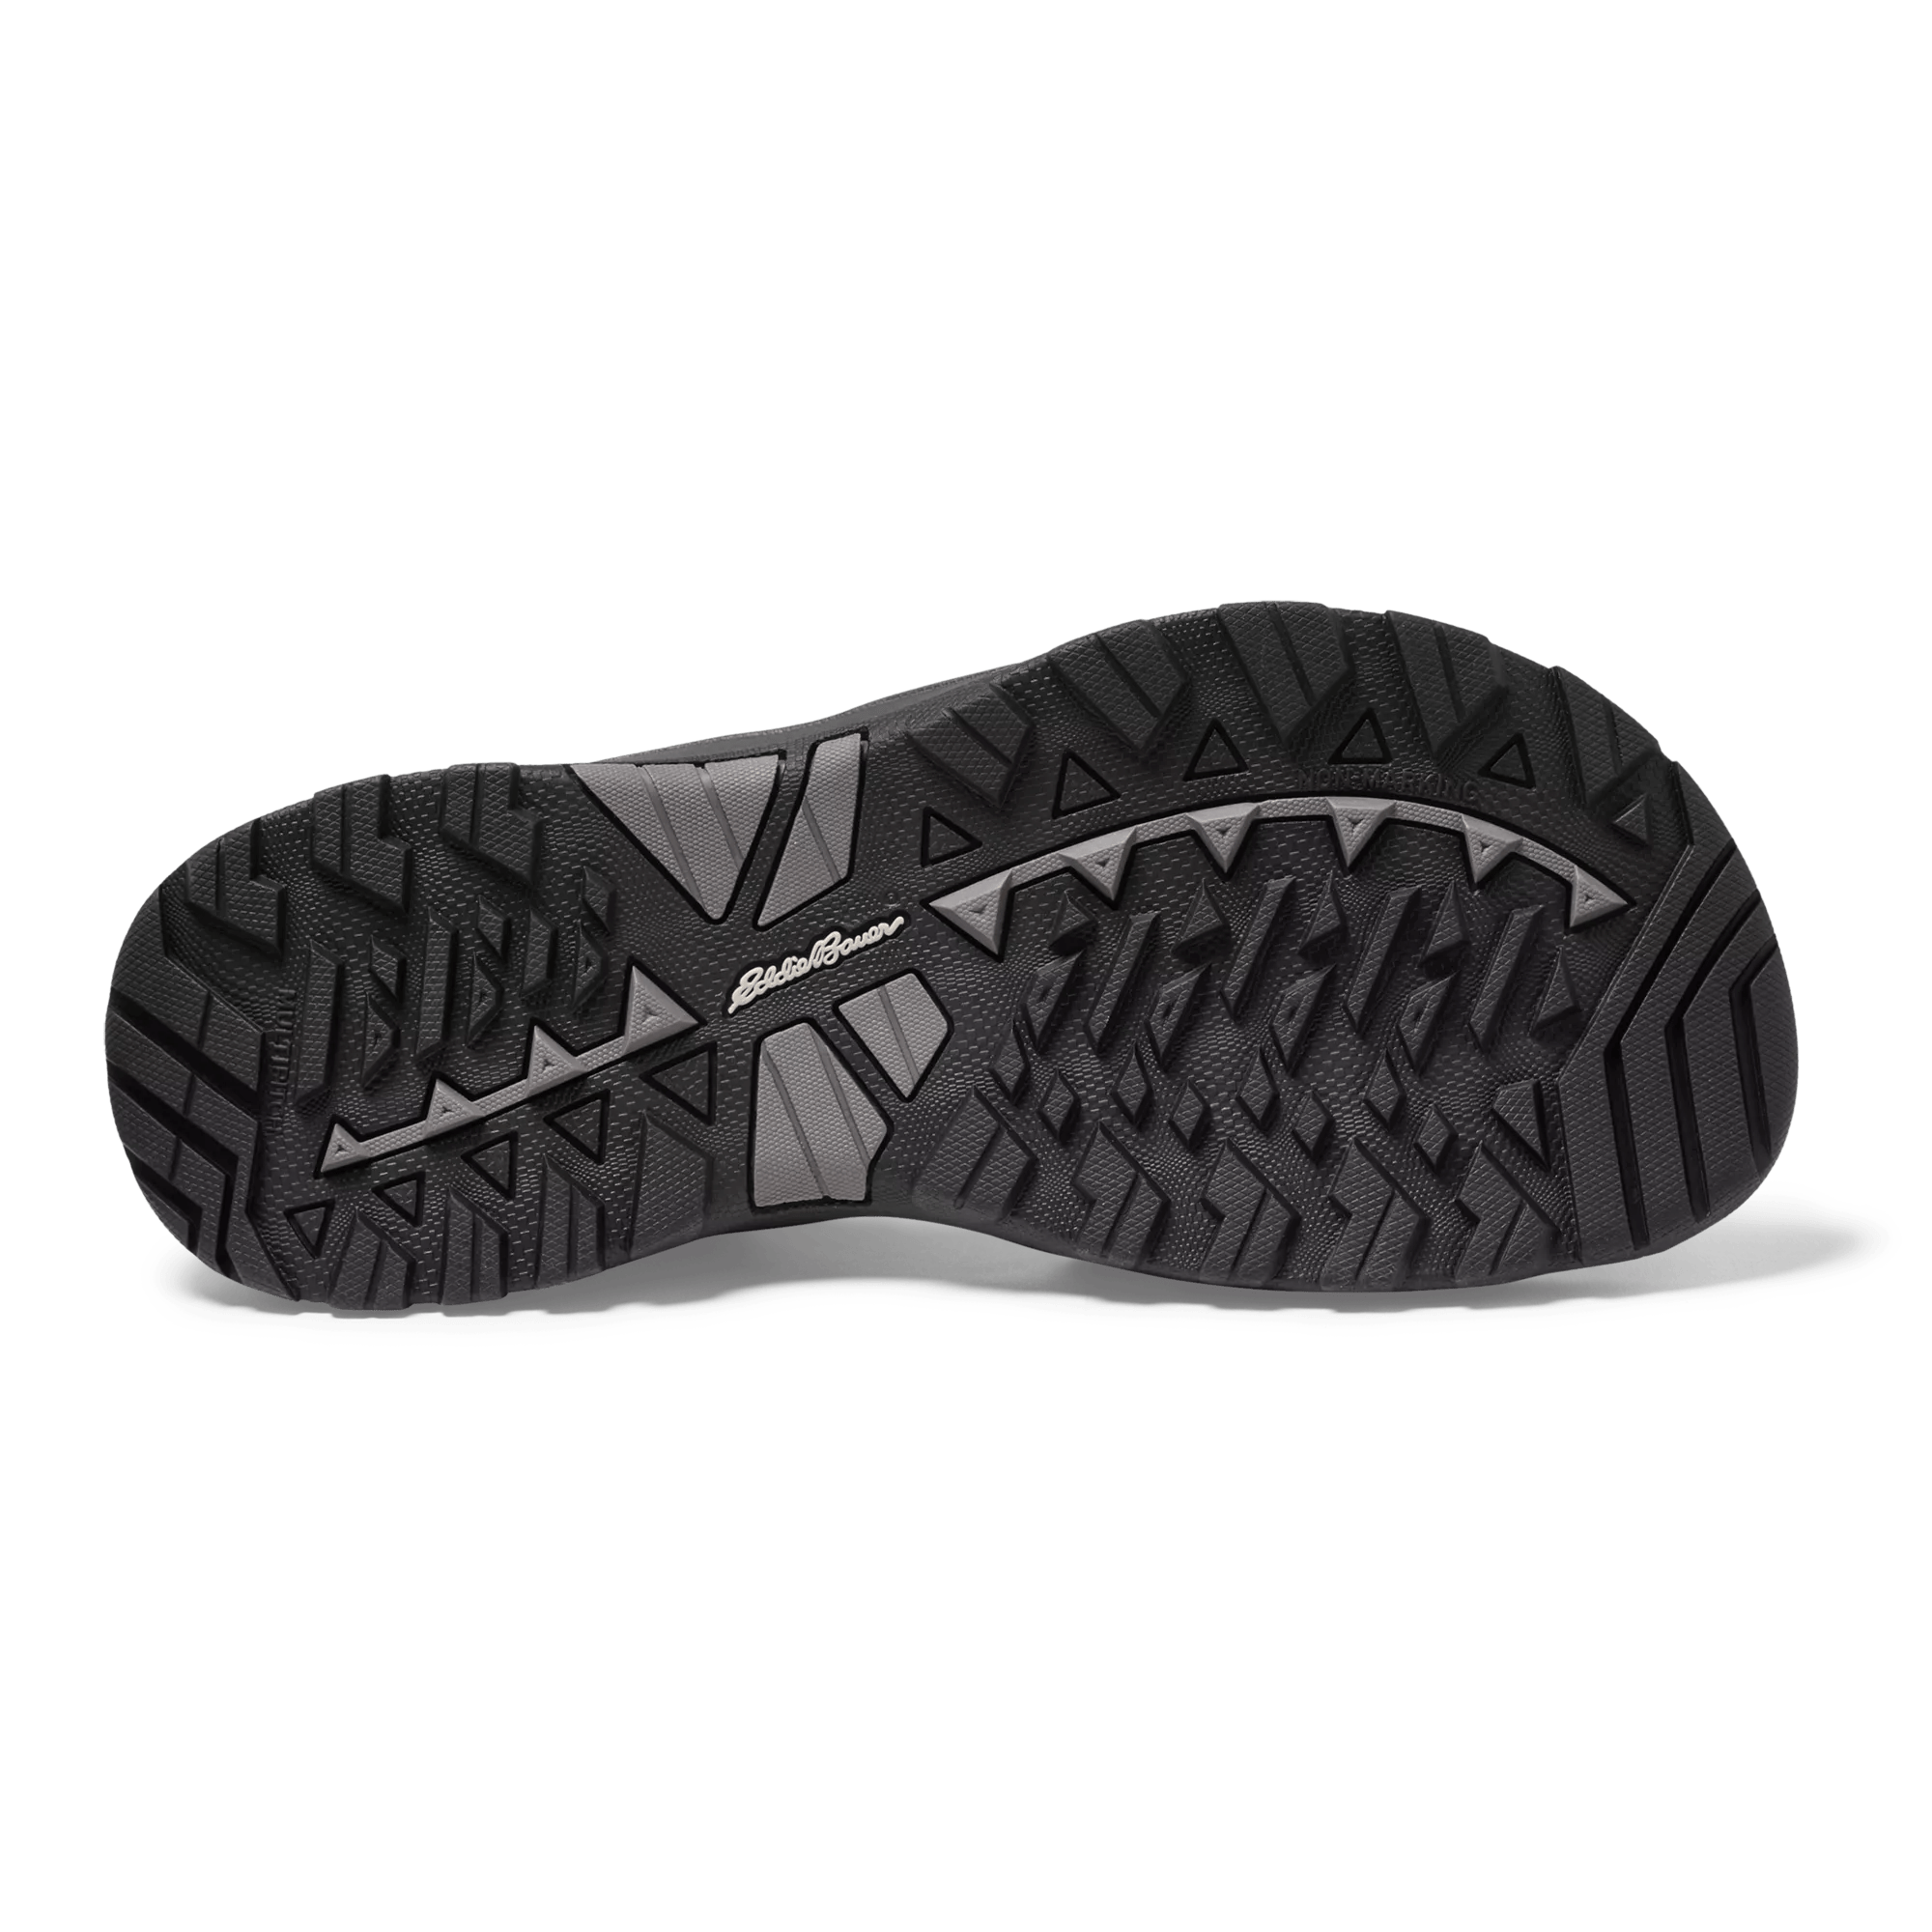 Sport Sandals